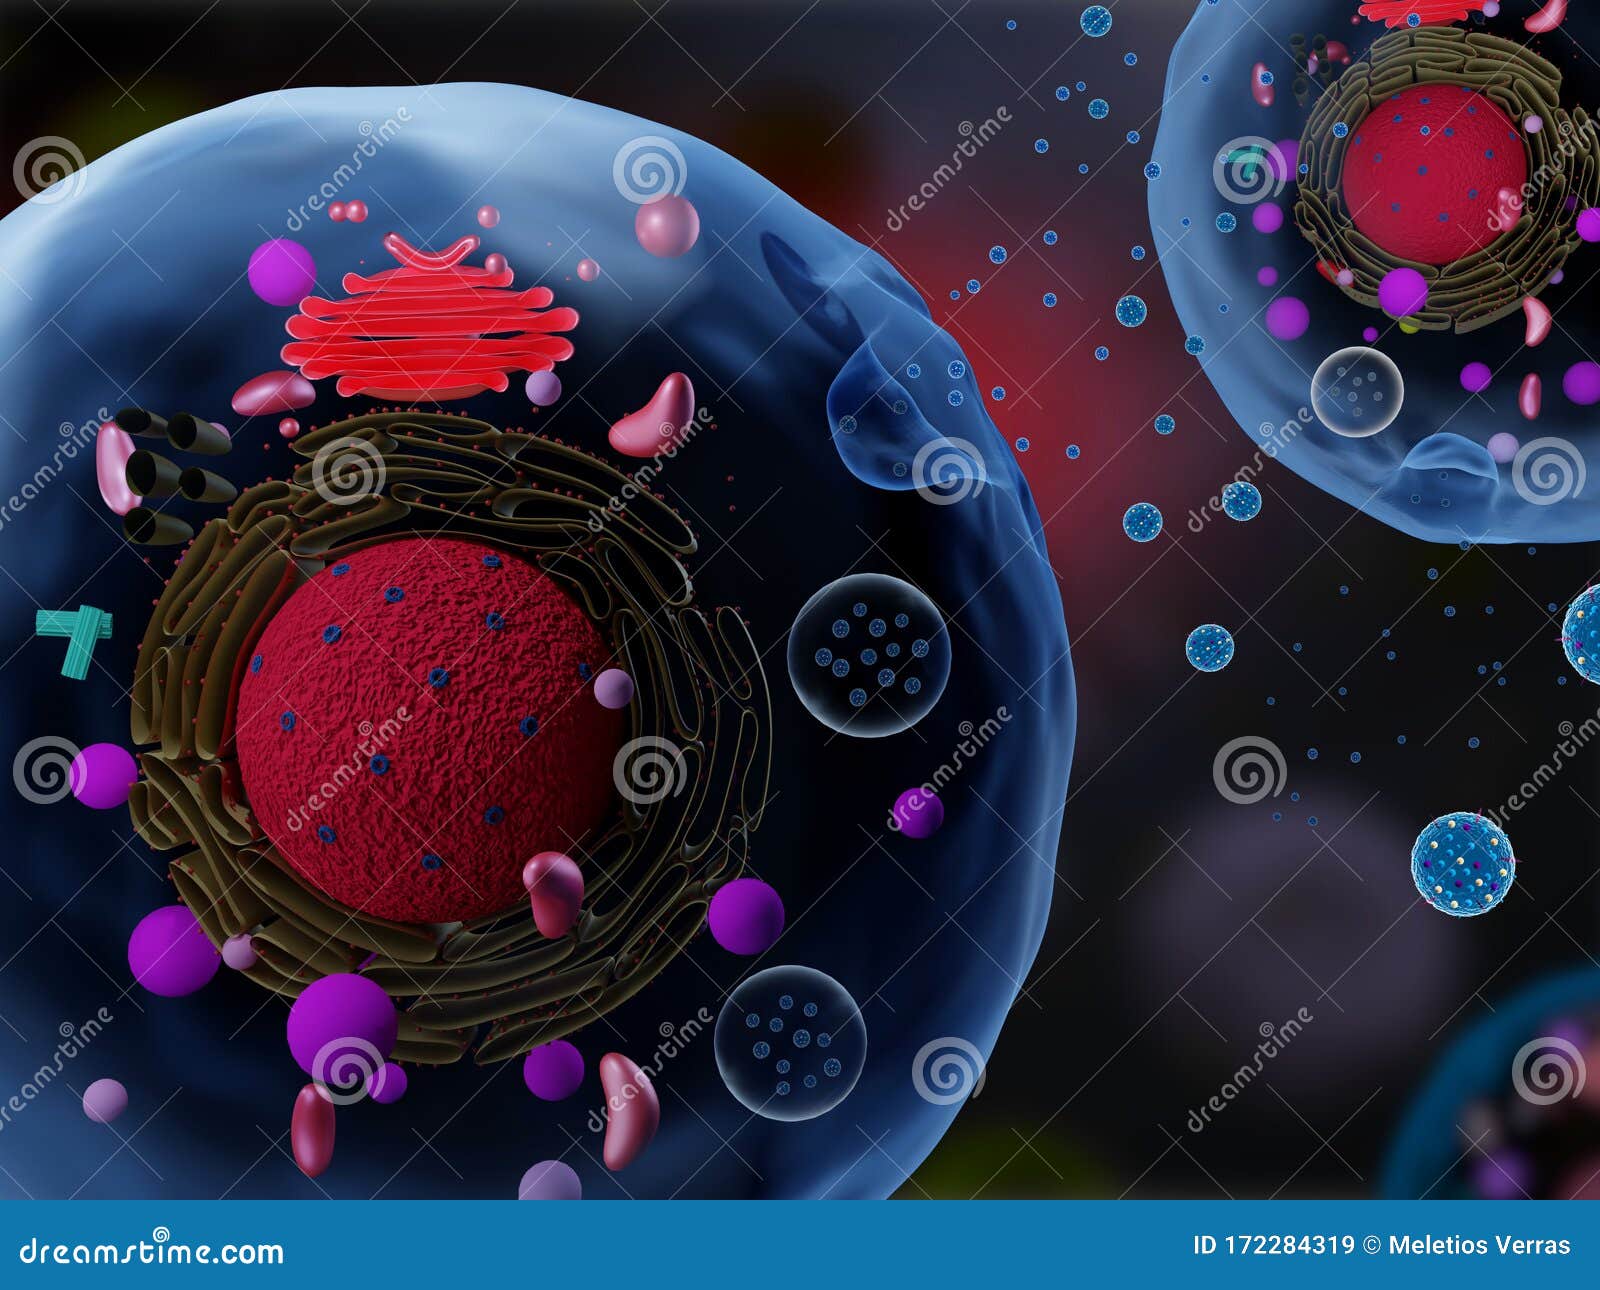 Cells secreting exosomes stock illustration. Illustration of biomedical ...